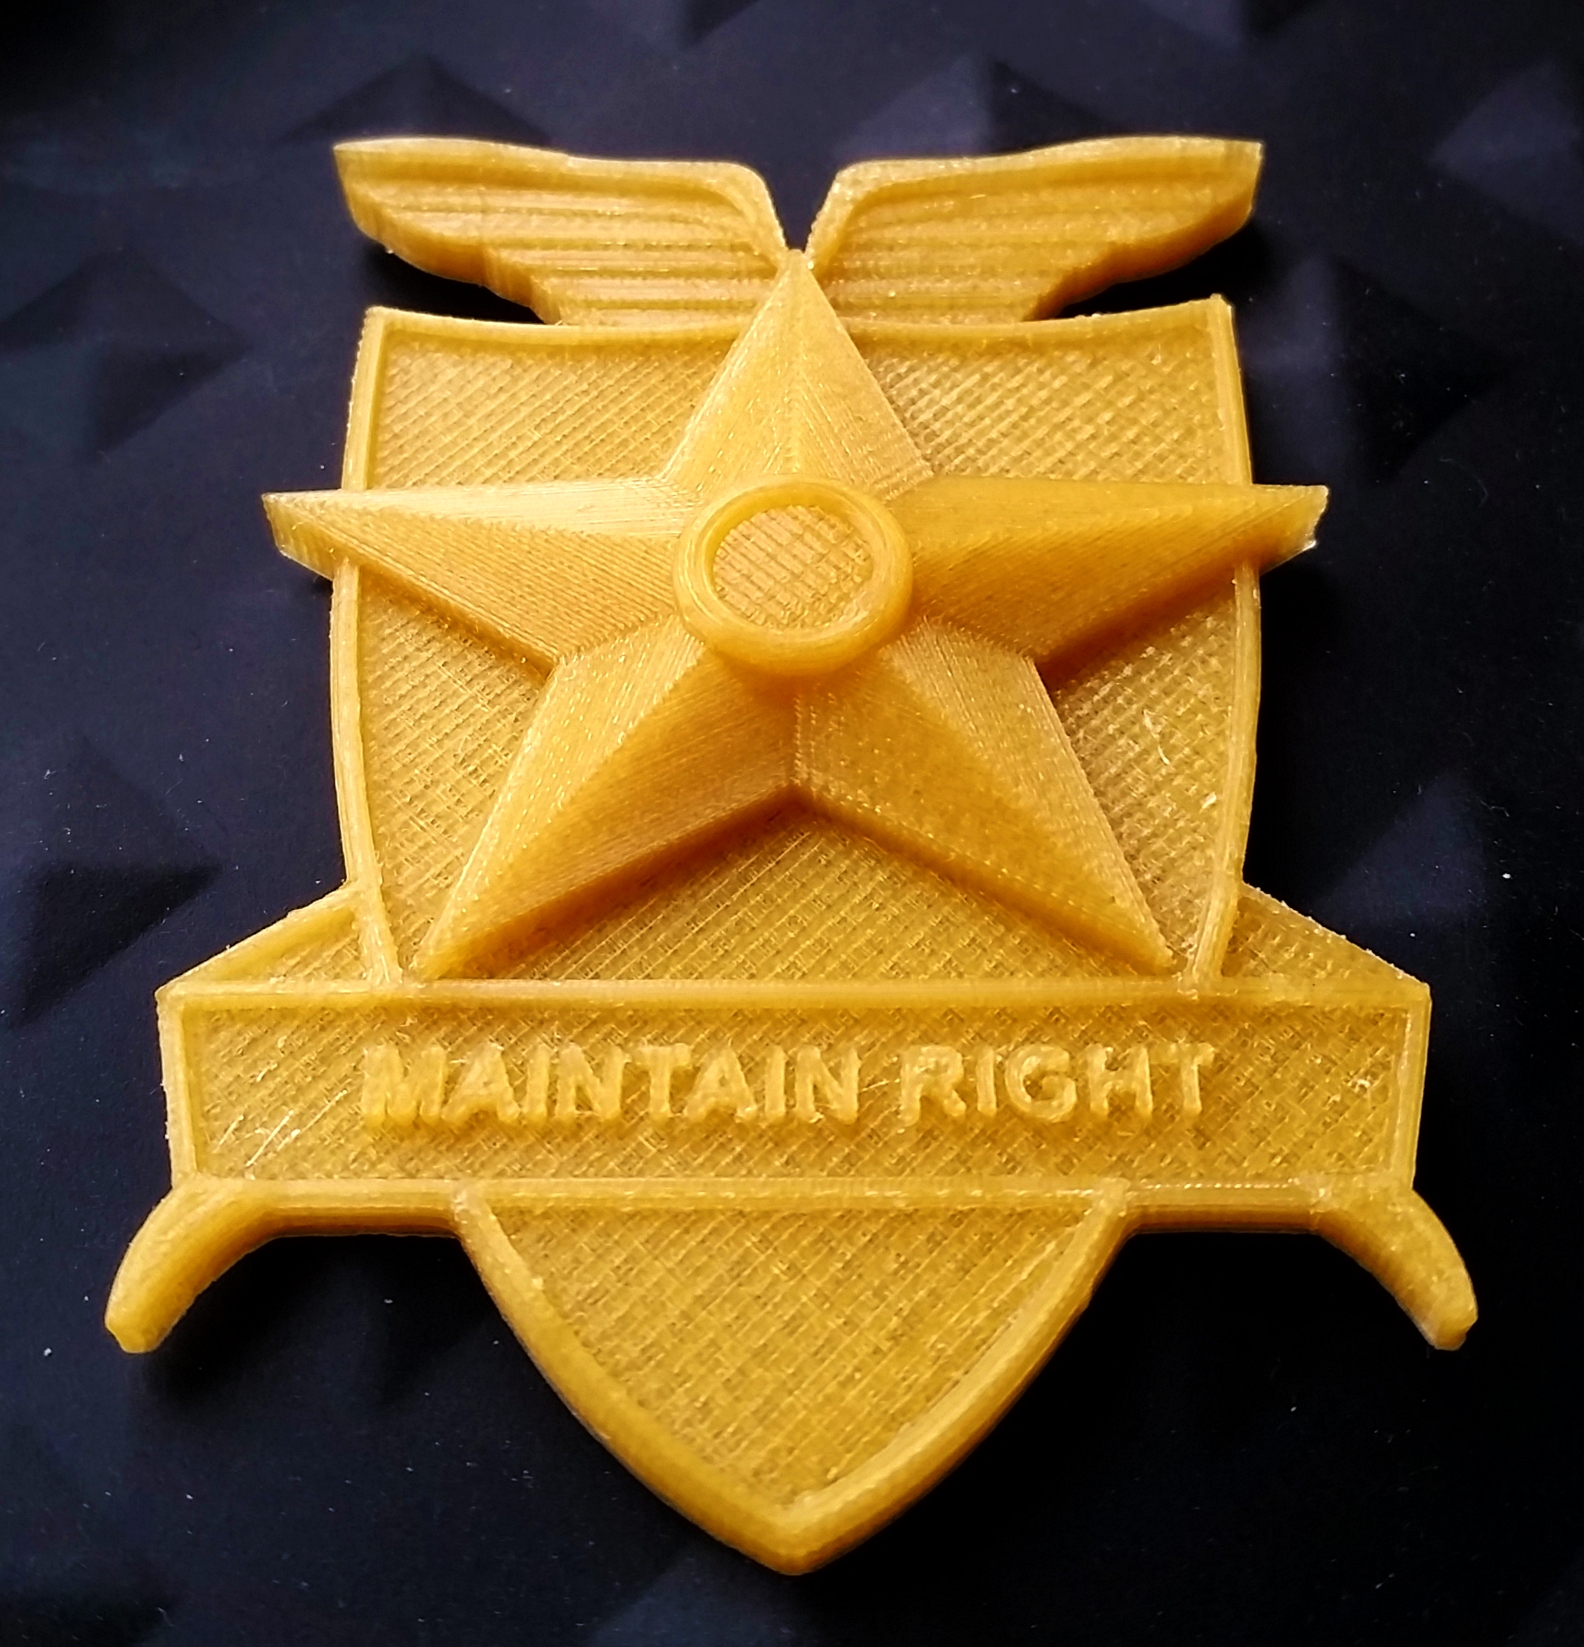 MFP Badge - Maintain Right (Mad Max)